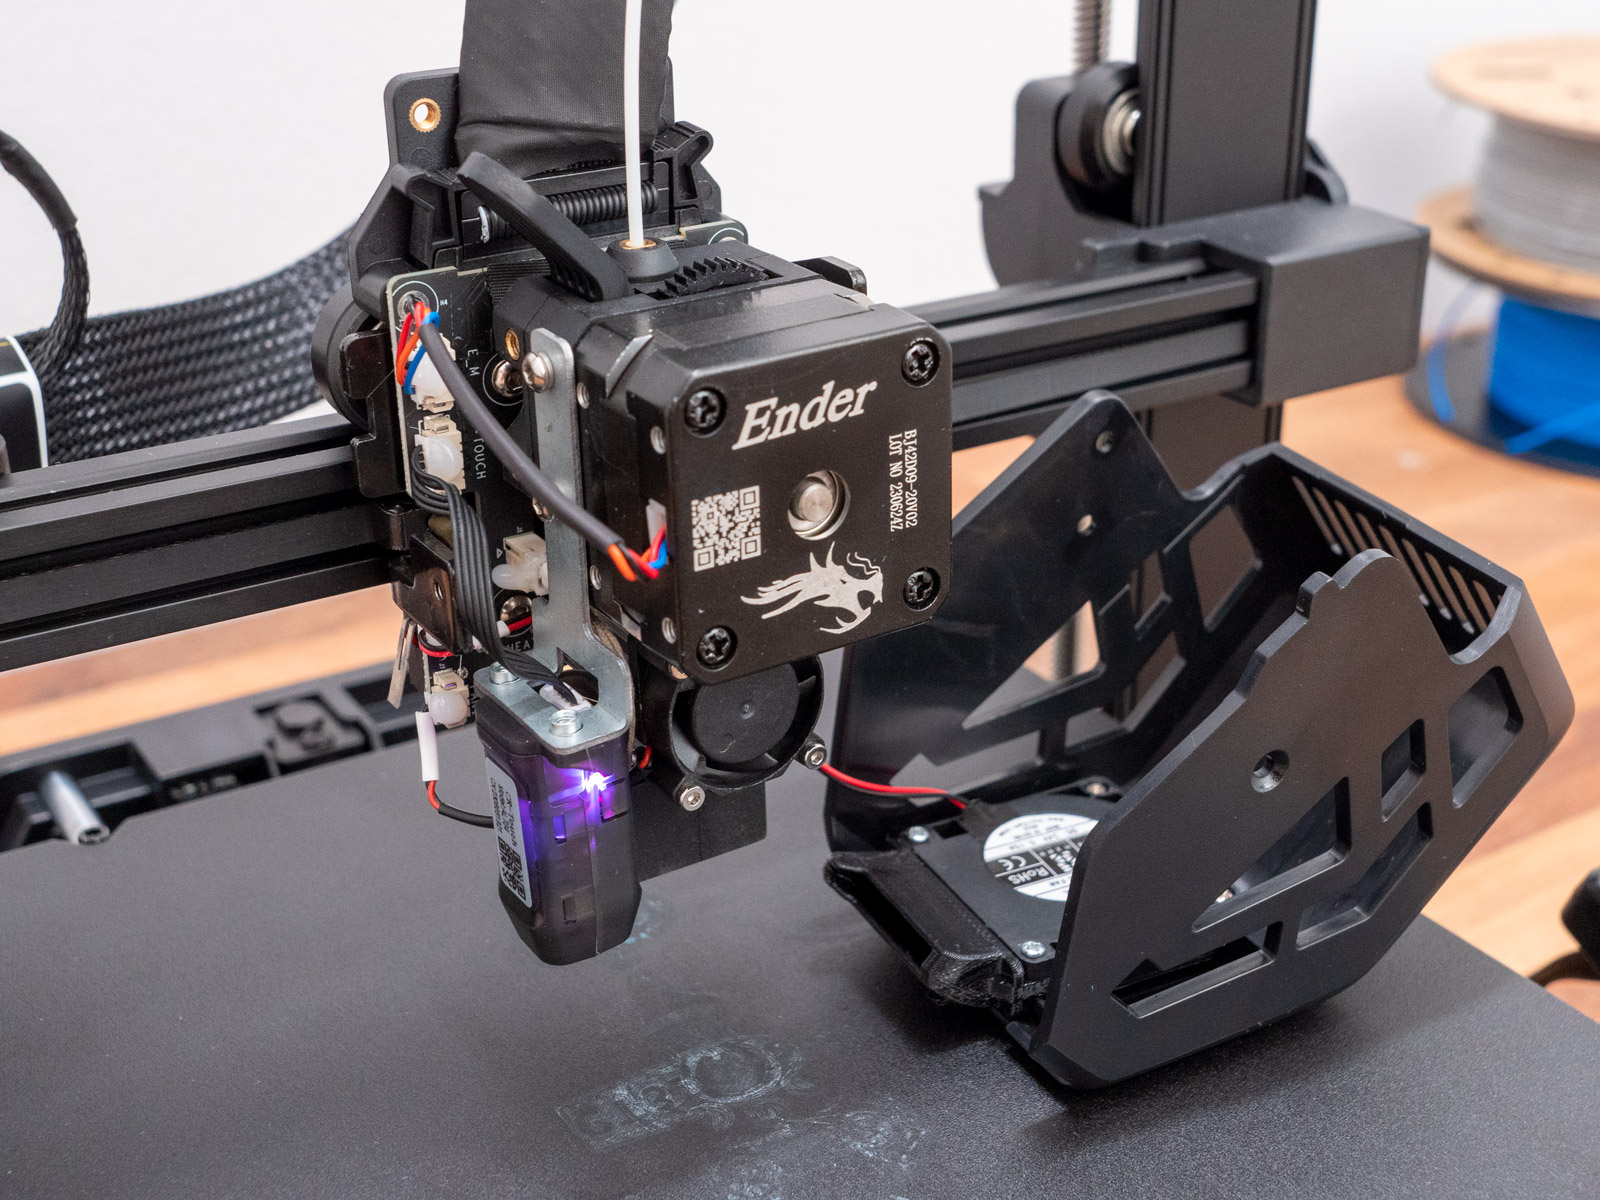 Creality Ender 3 Review: Best 3D Printer Under $200